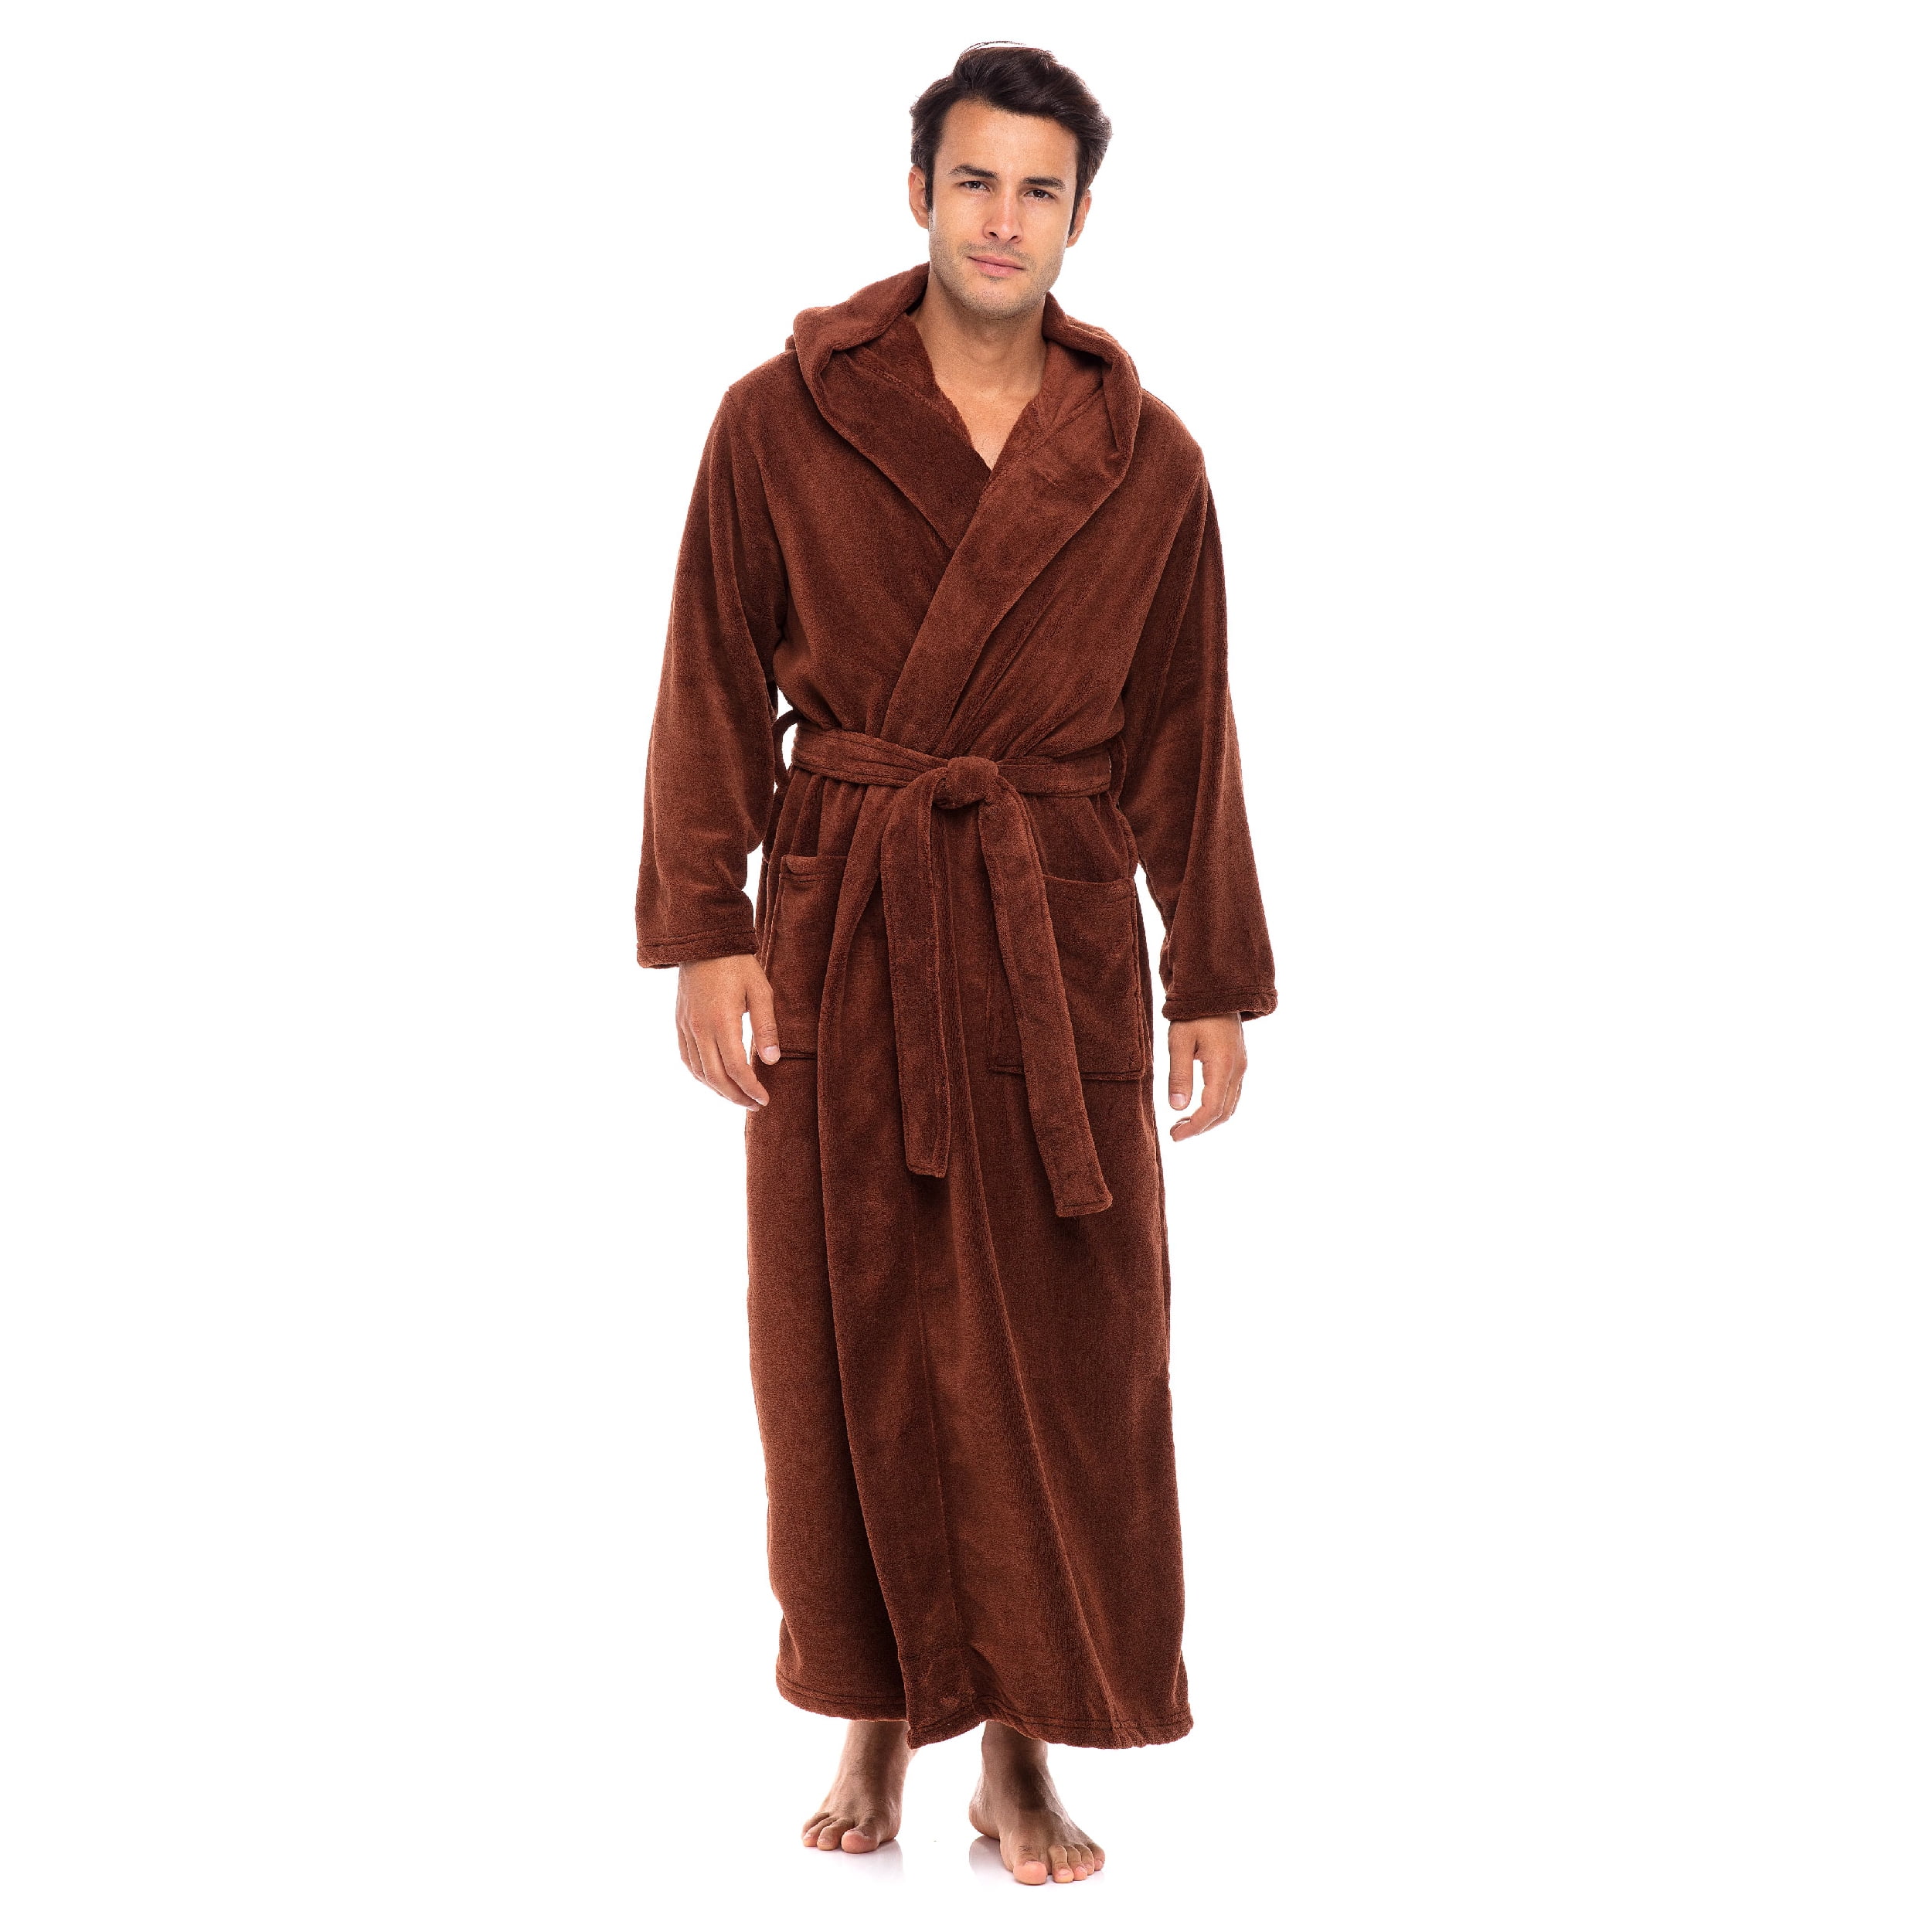 Big and Tall Bathrobe Alexander Del Rossa Mens Plush Warm Robe with Hood 